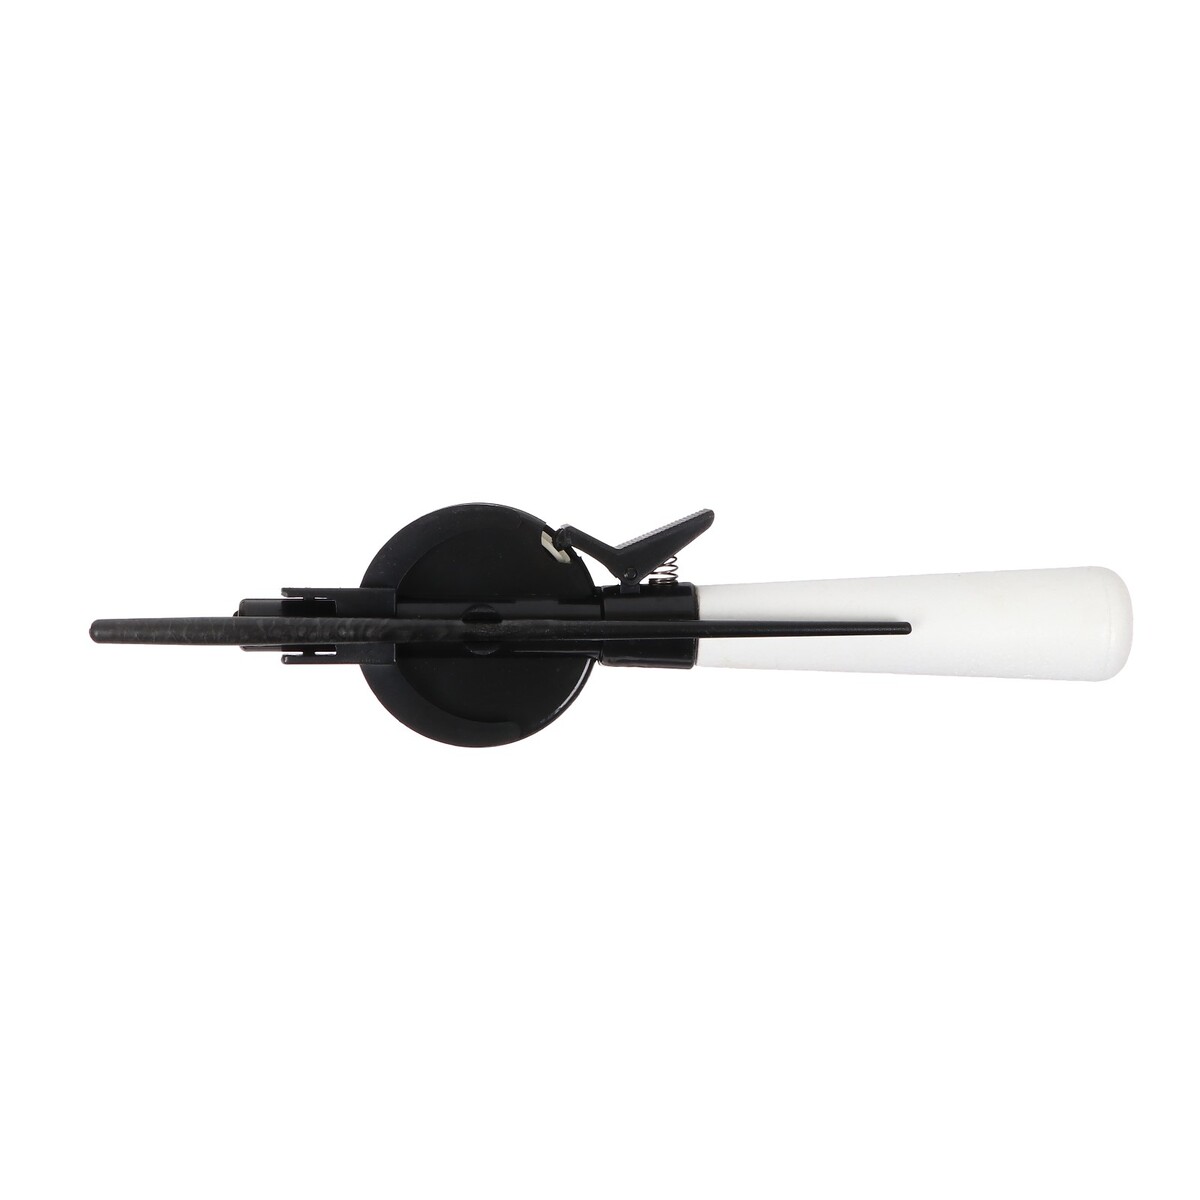 фото Удочка зимняя, ручка пенопласт длиной 100 мм, диаметр катушки 5.5 см, hfb-5b no brand